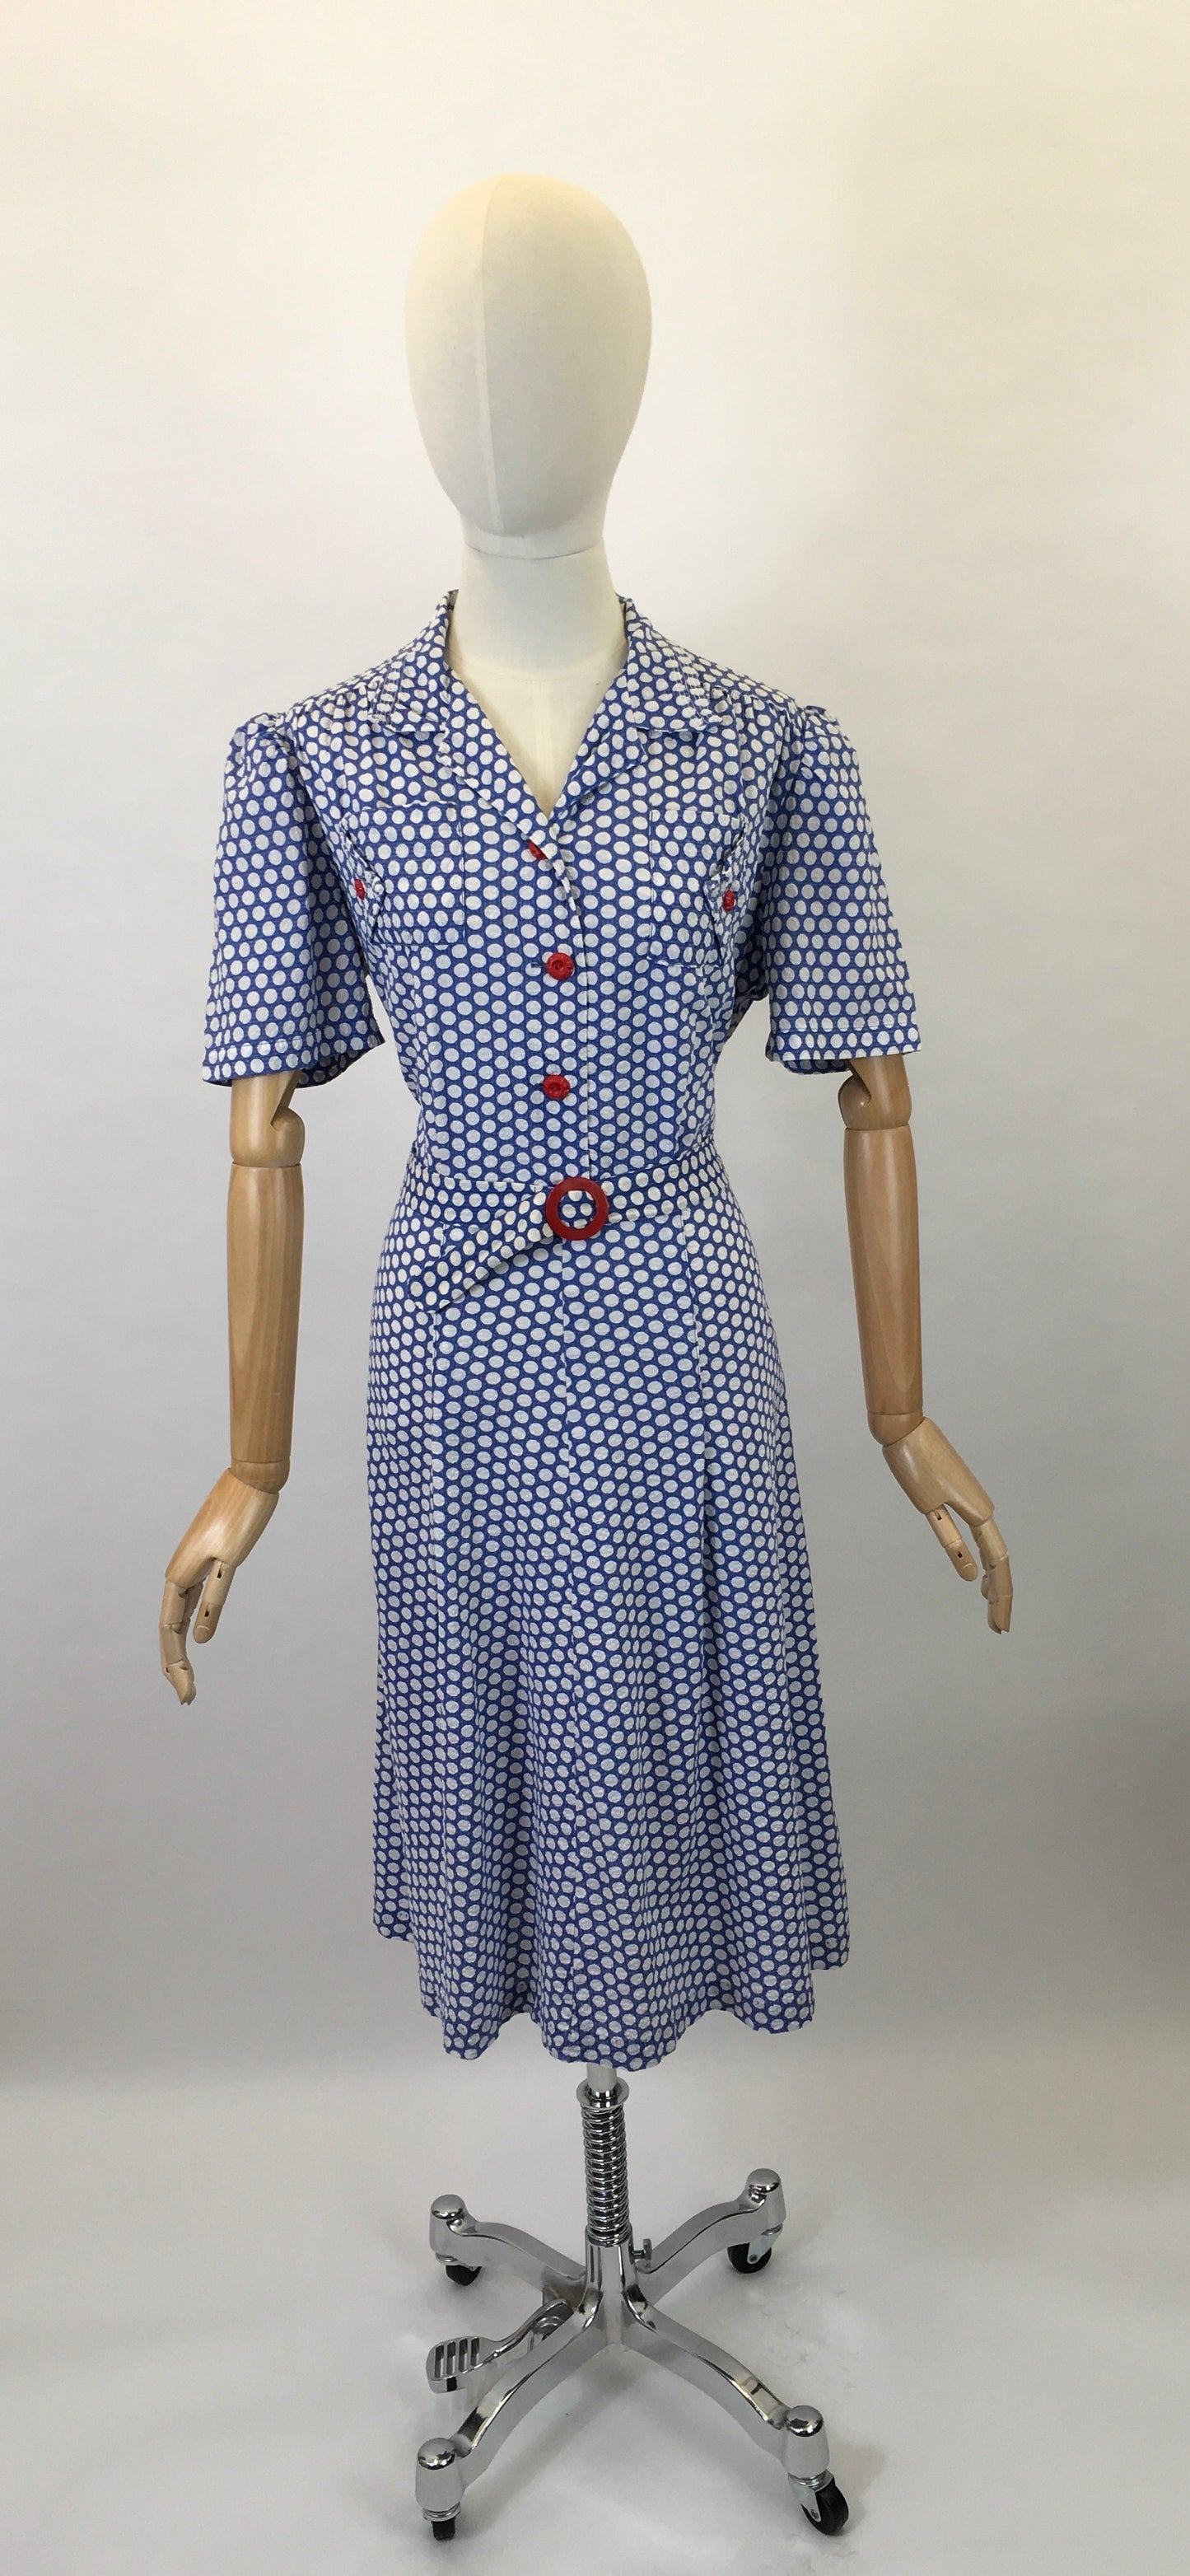 Original 1940’s Stunning Seersucker Day Dress - In A Lovely Cornflower Blue With Red Accents